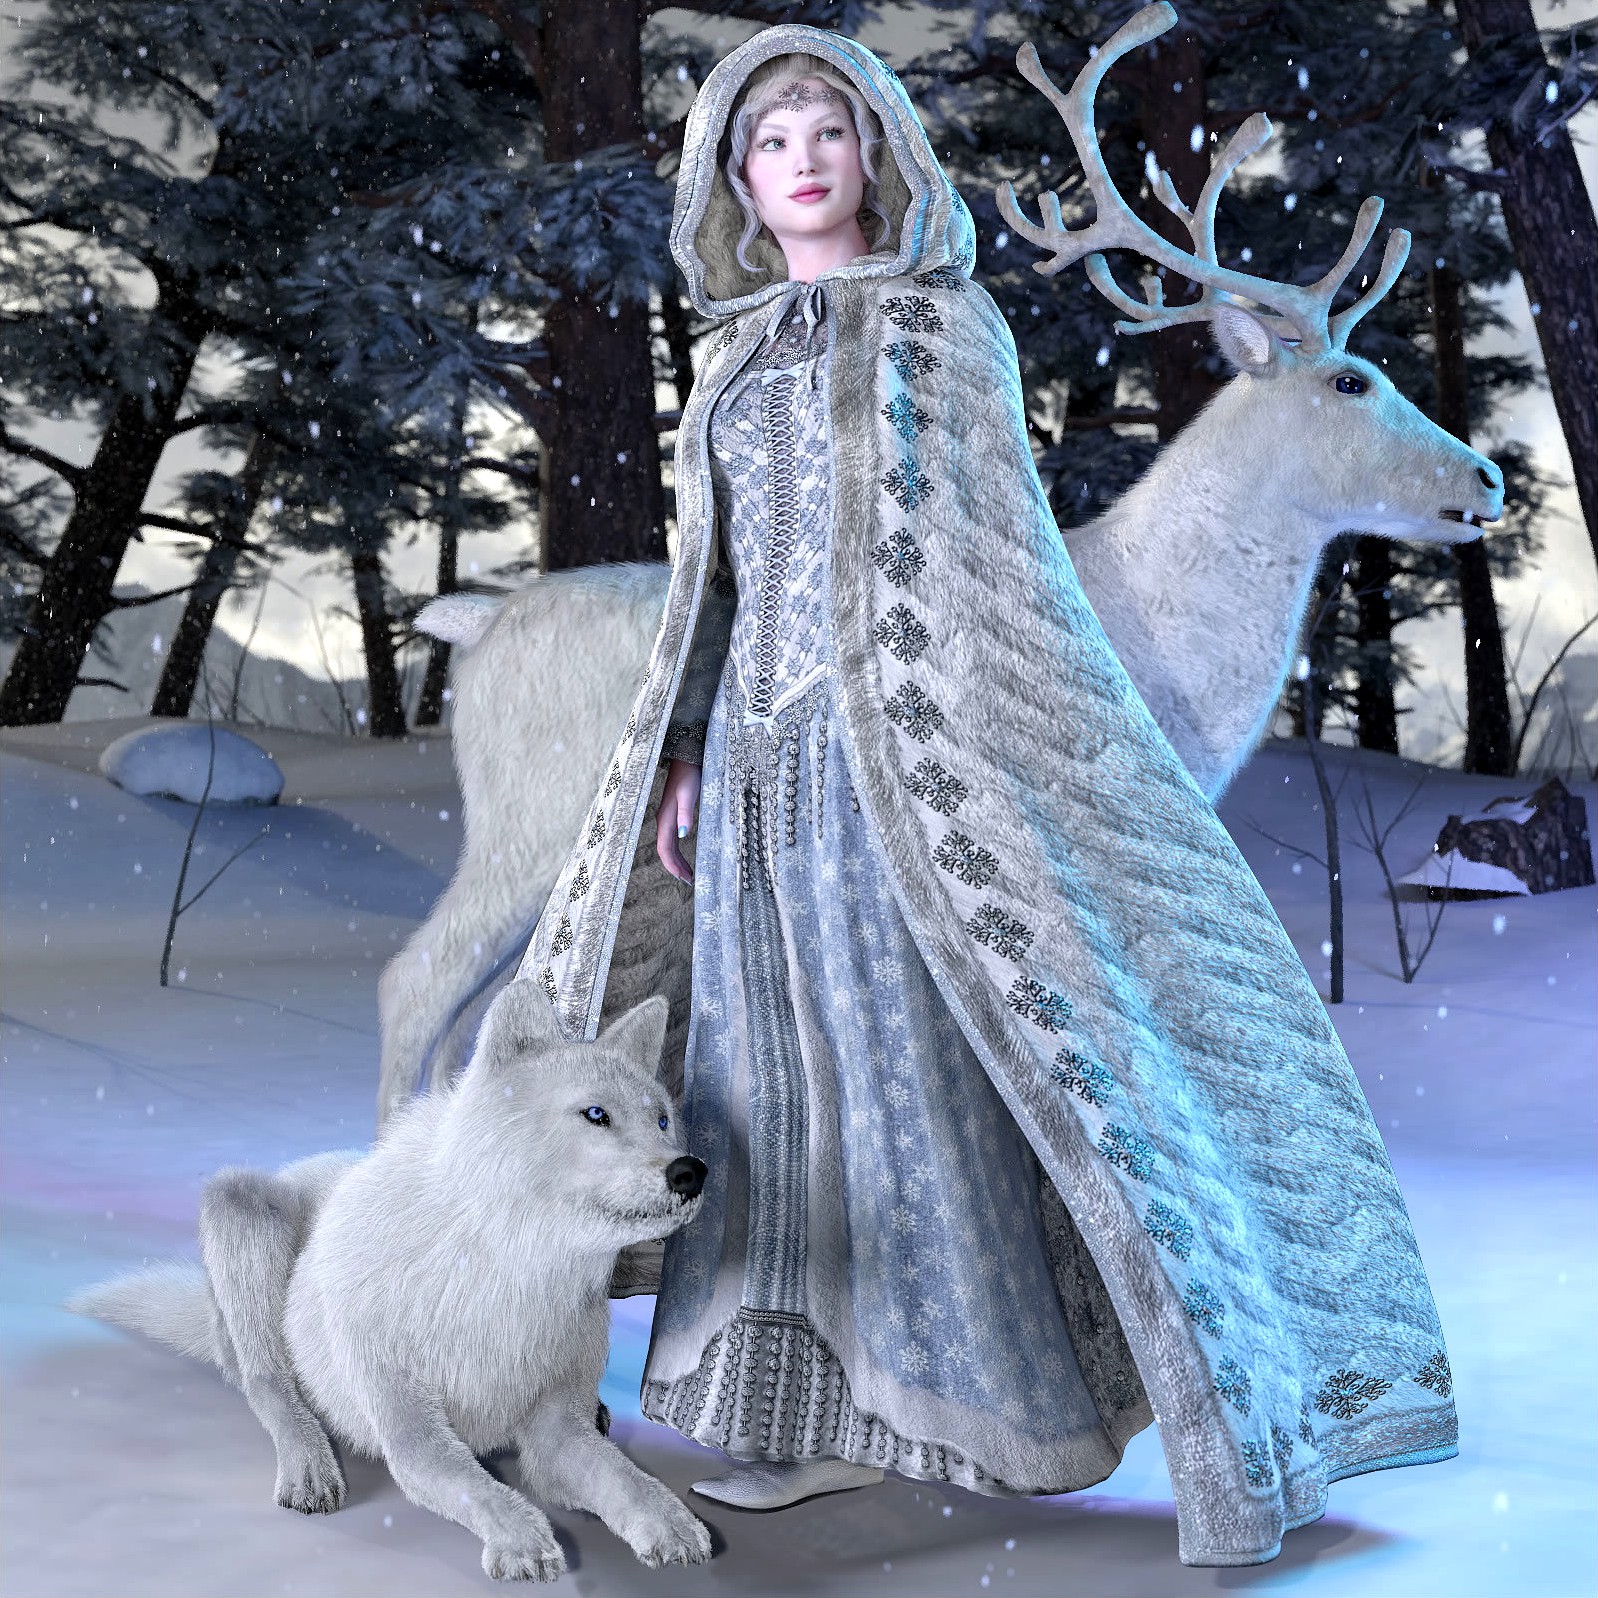 Princess of Winter